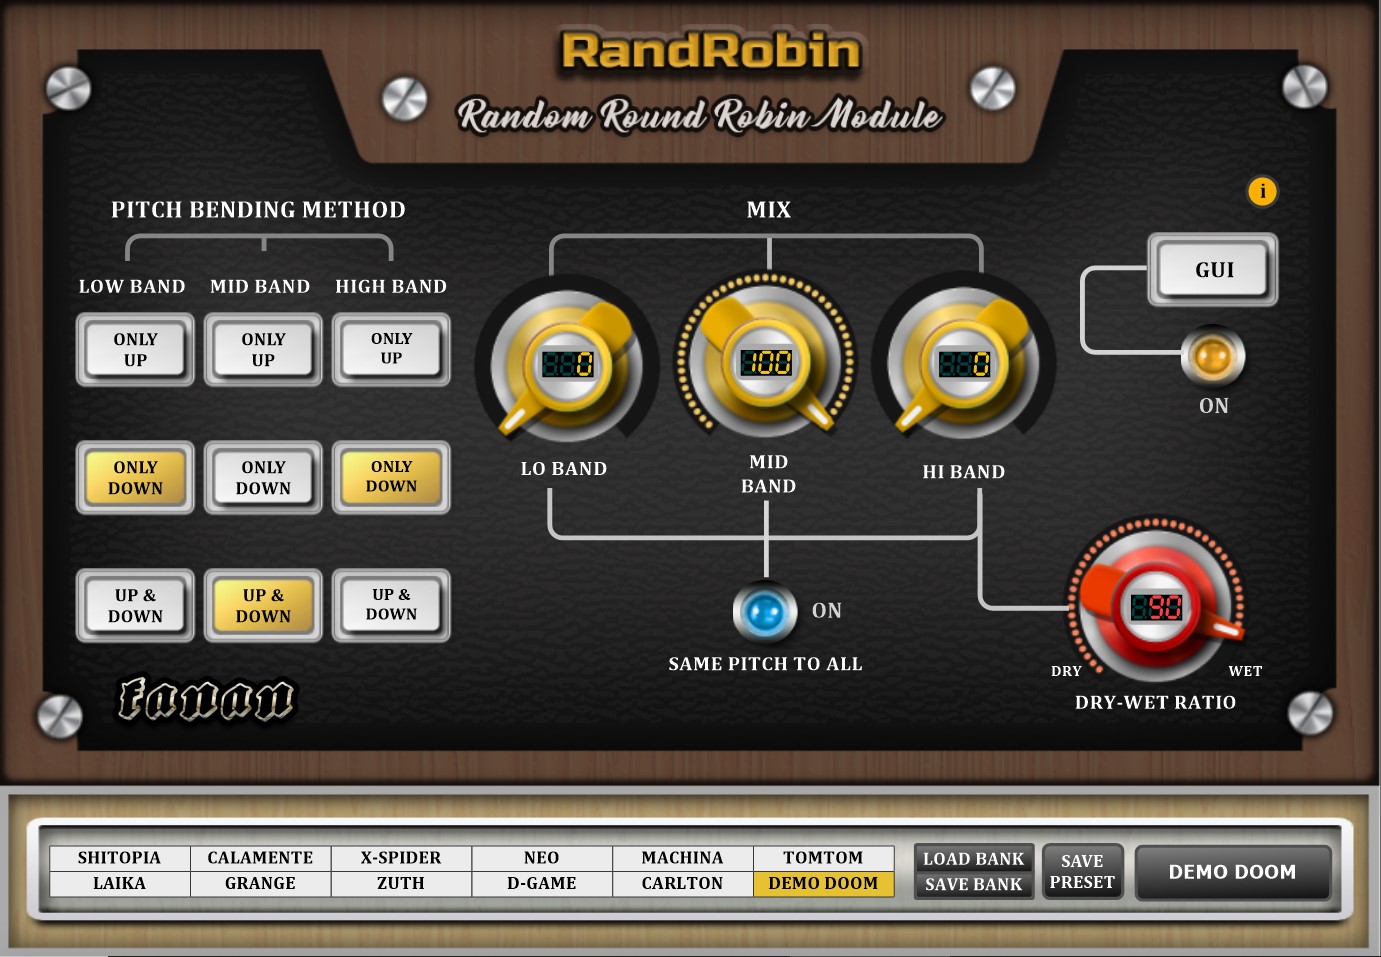 Fanan Team releases RandRobin - Free Random Round Robin Module for Windows